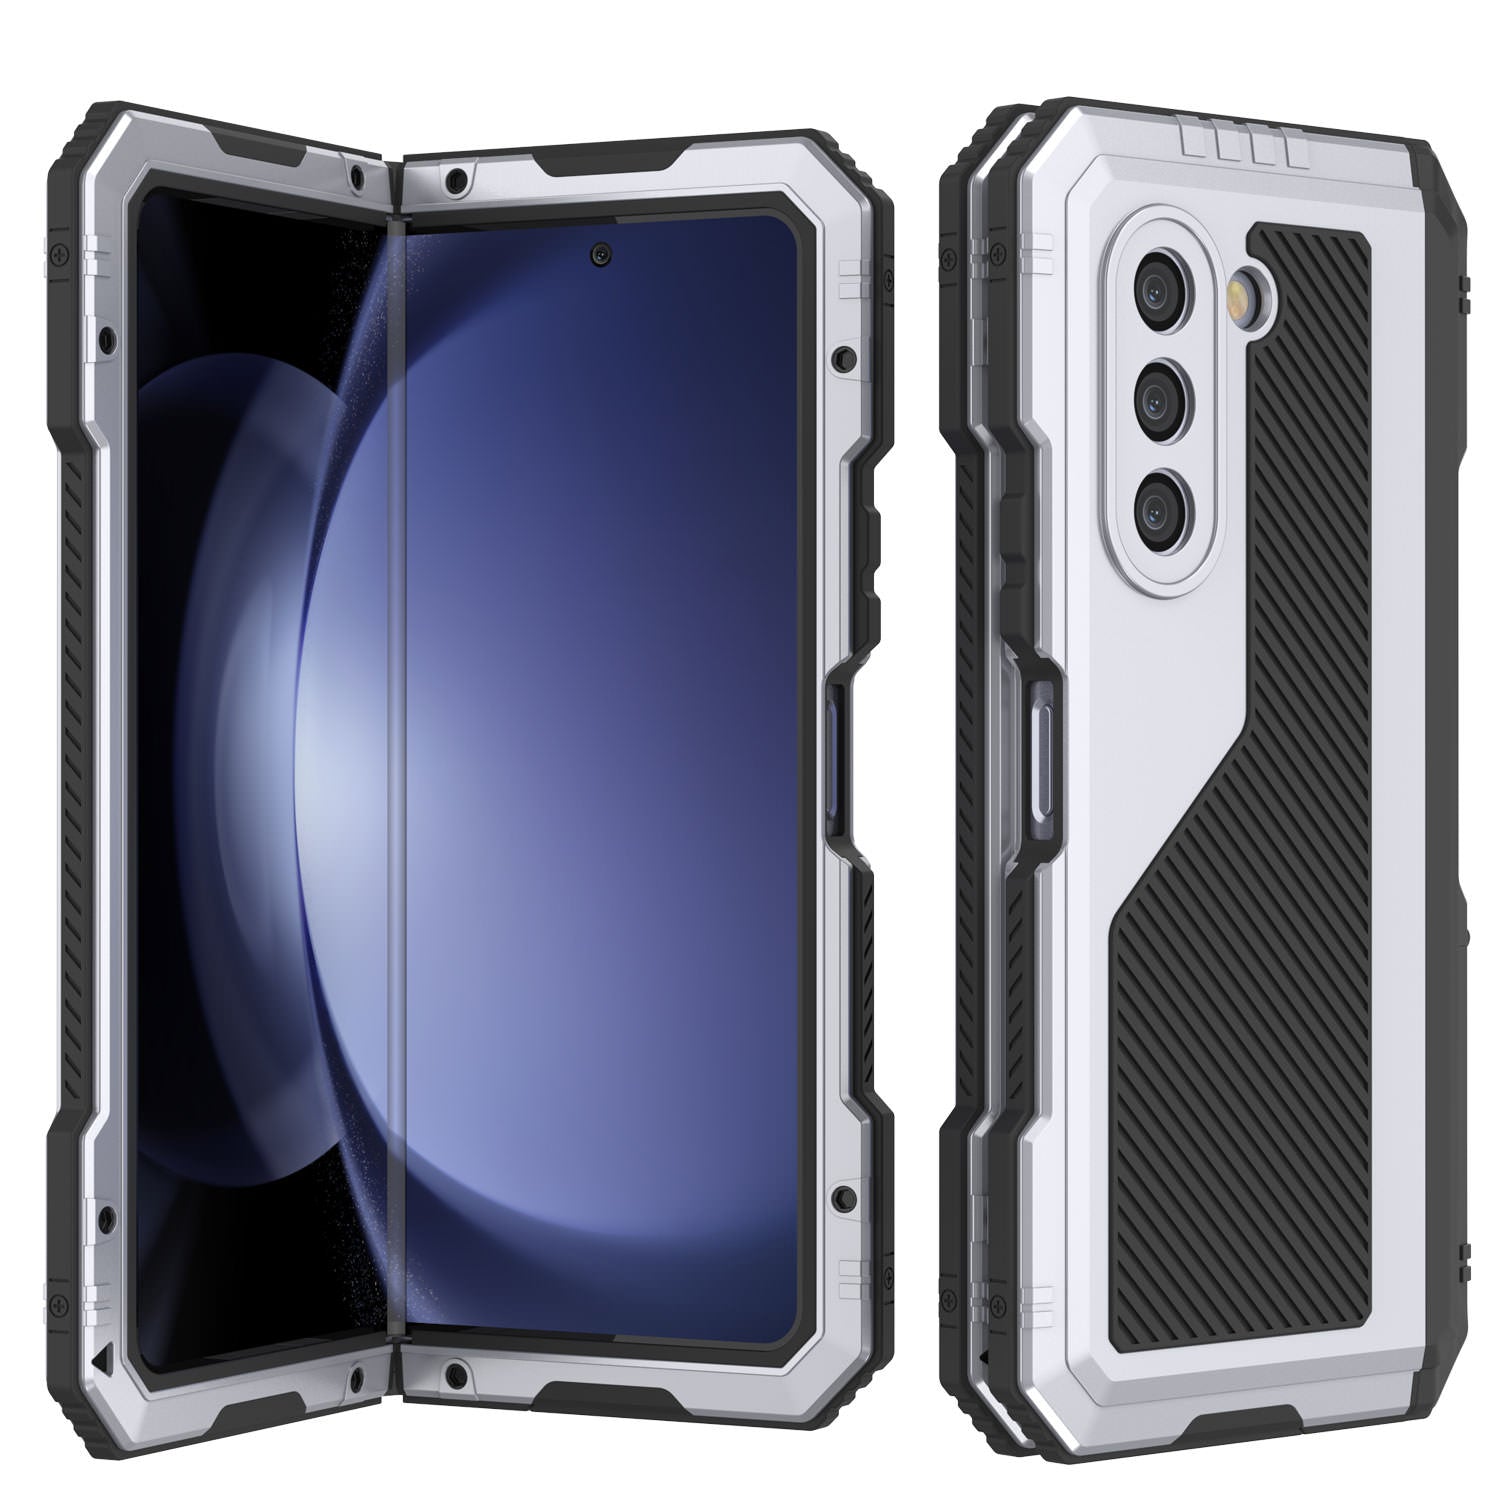 Galaxy Z Fold5 Metal Case, Heavy Duty Military Grade Armor Cover Full Body Hard [White]